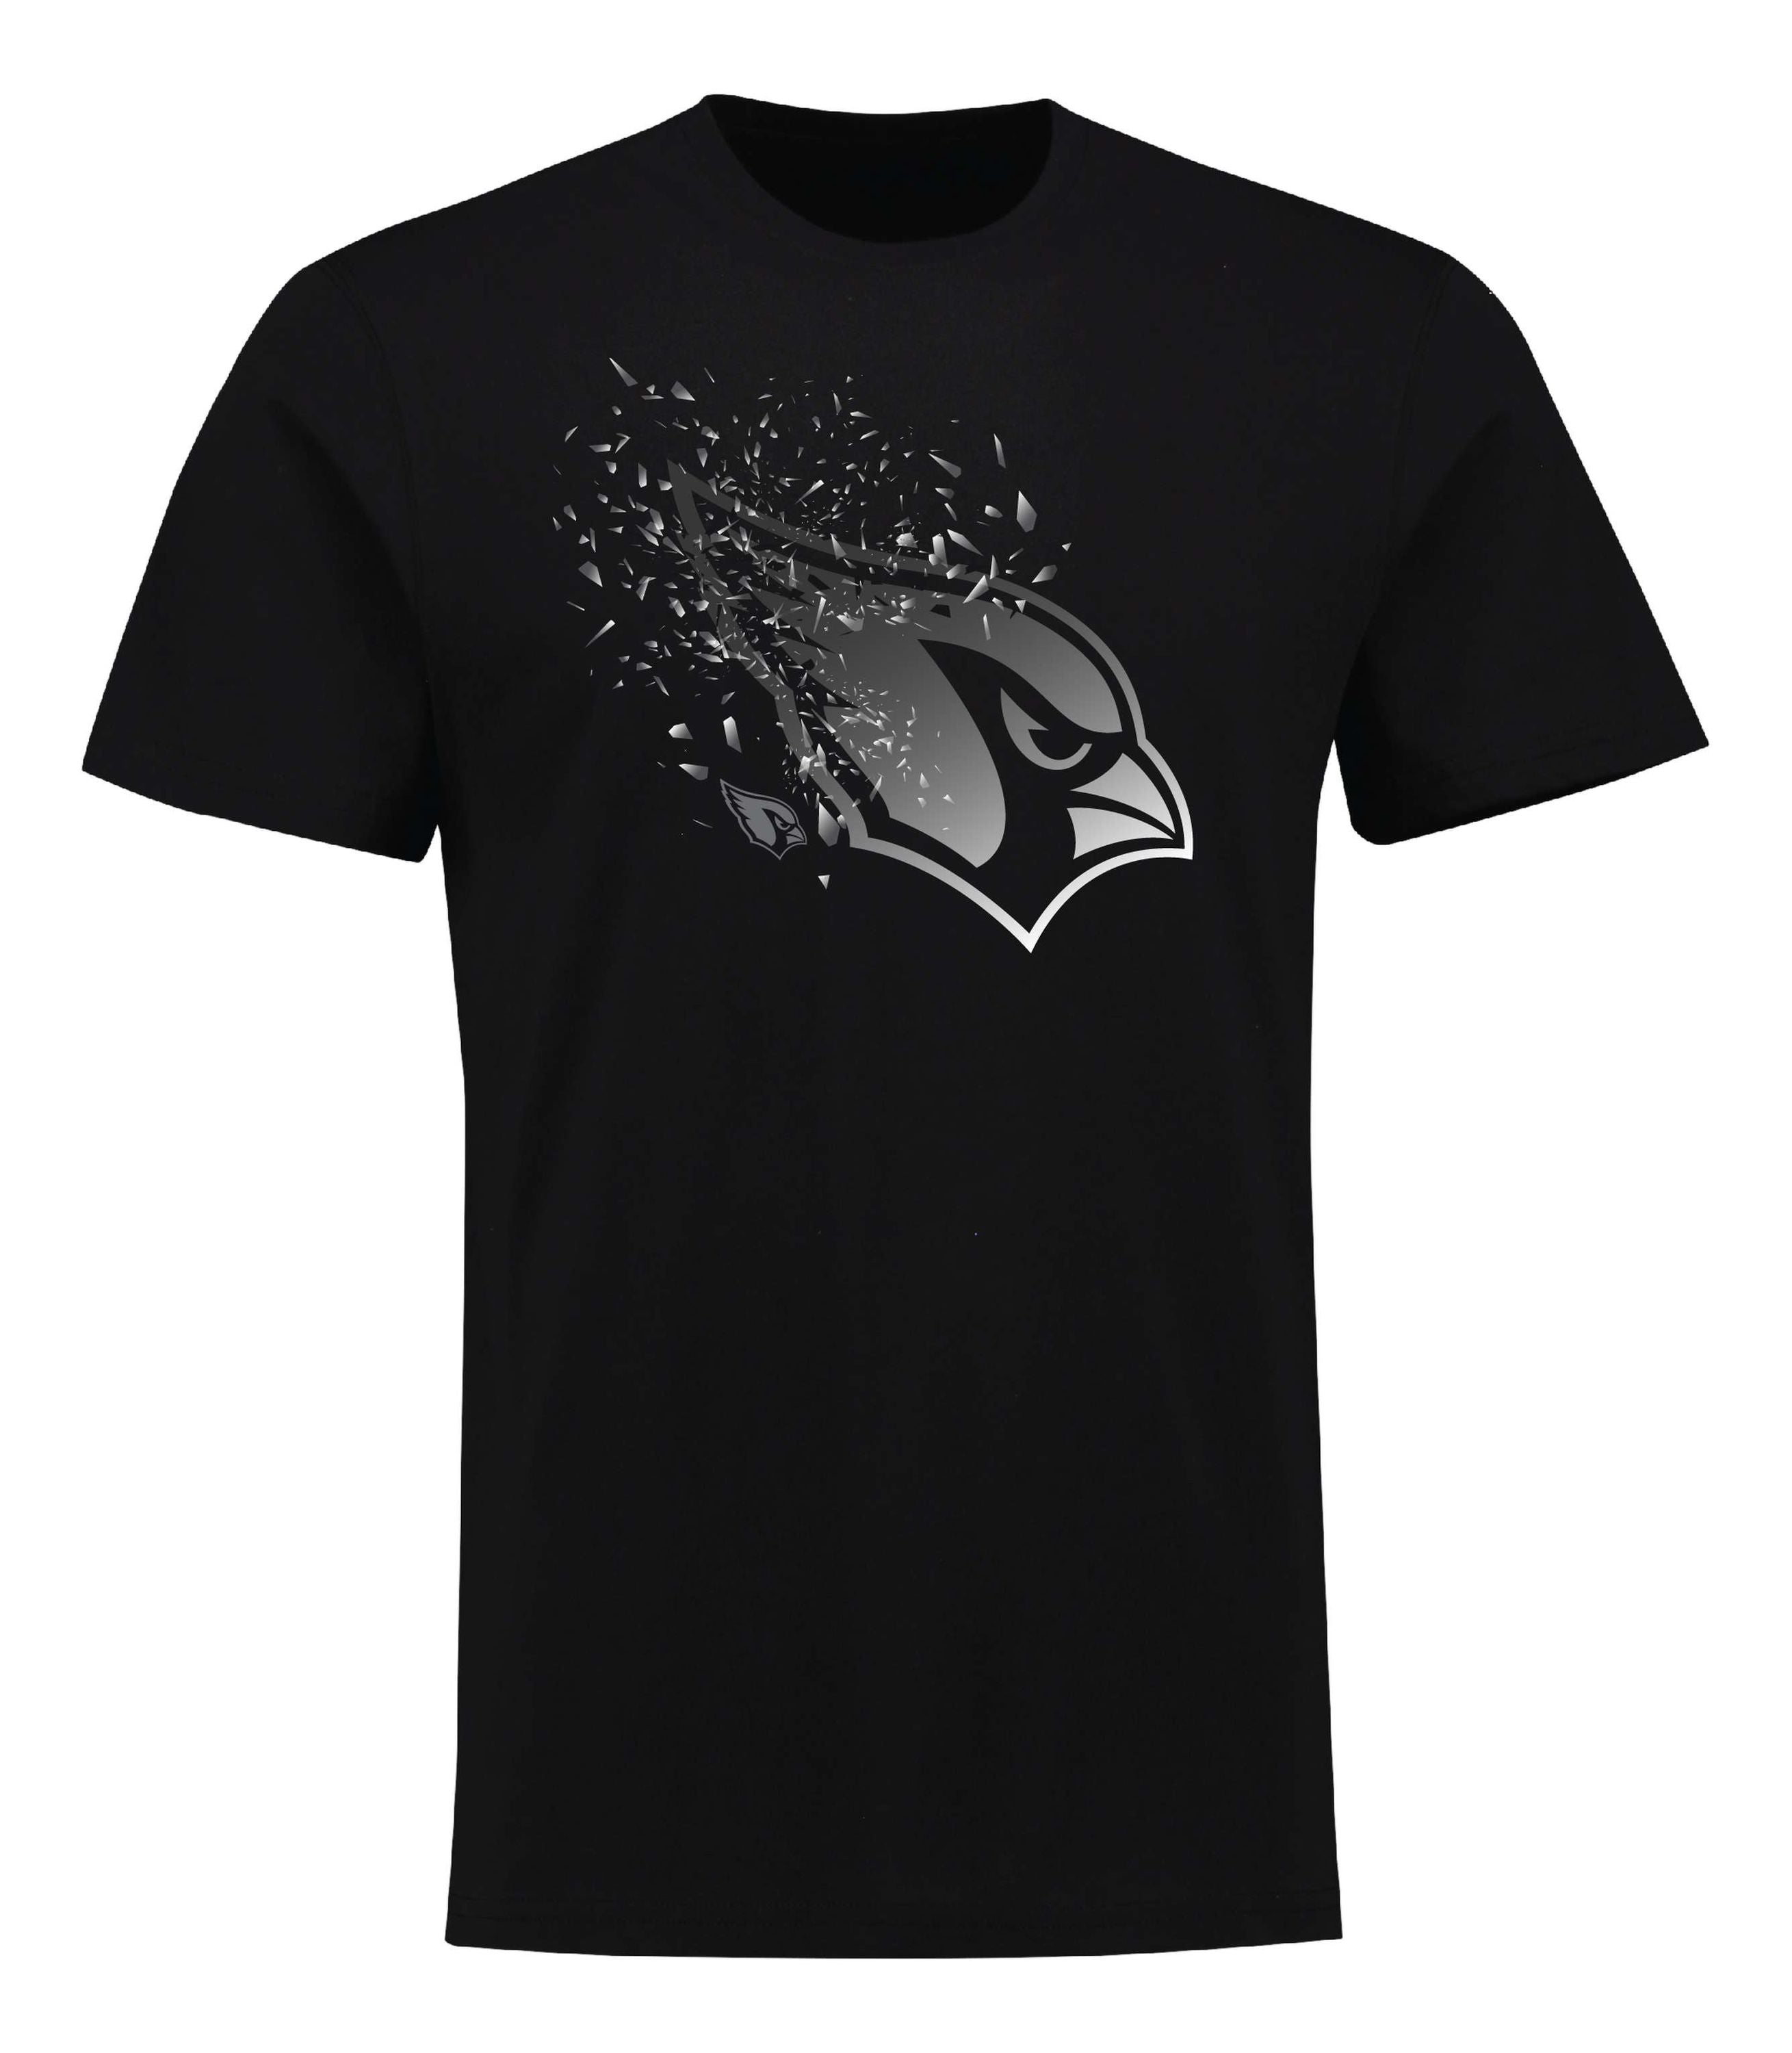 Fanatics - NFL Arizona Cardinals Shatter Graphic T-Shirt - Schwarz